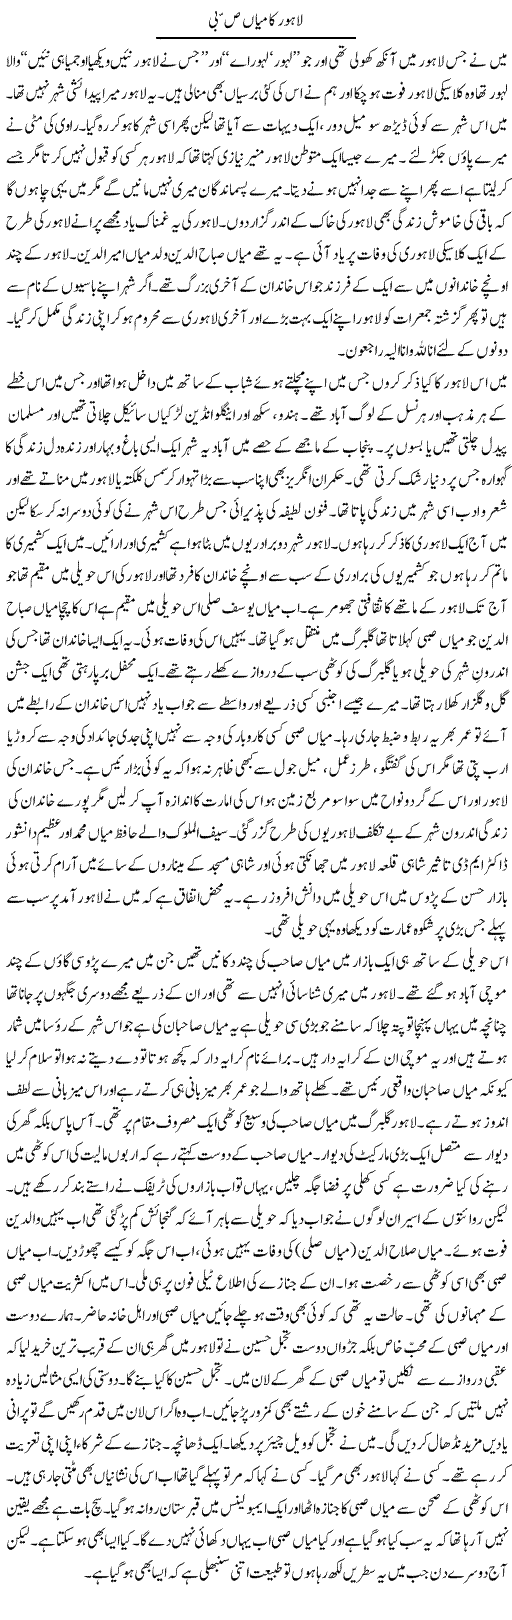 Mian of Lahore Express Column Abdul Qadir 11 December 2010